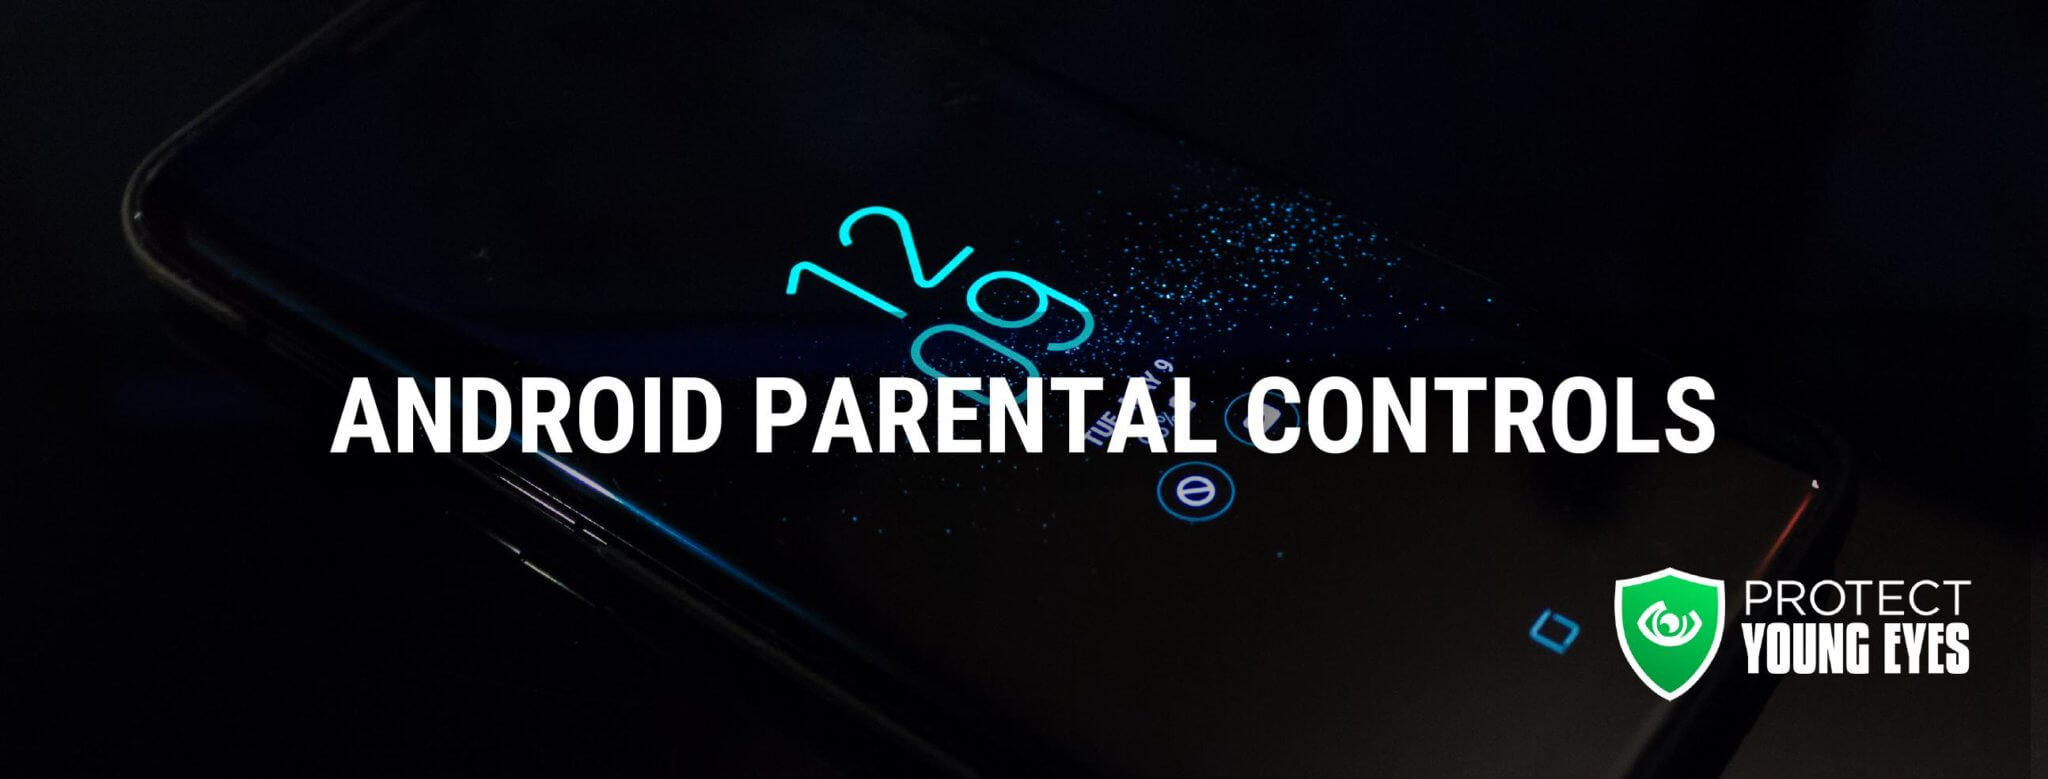 airdroid parental control apk